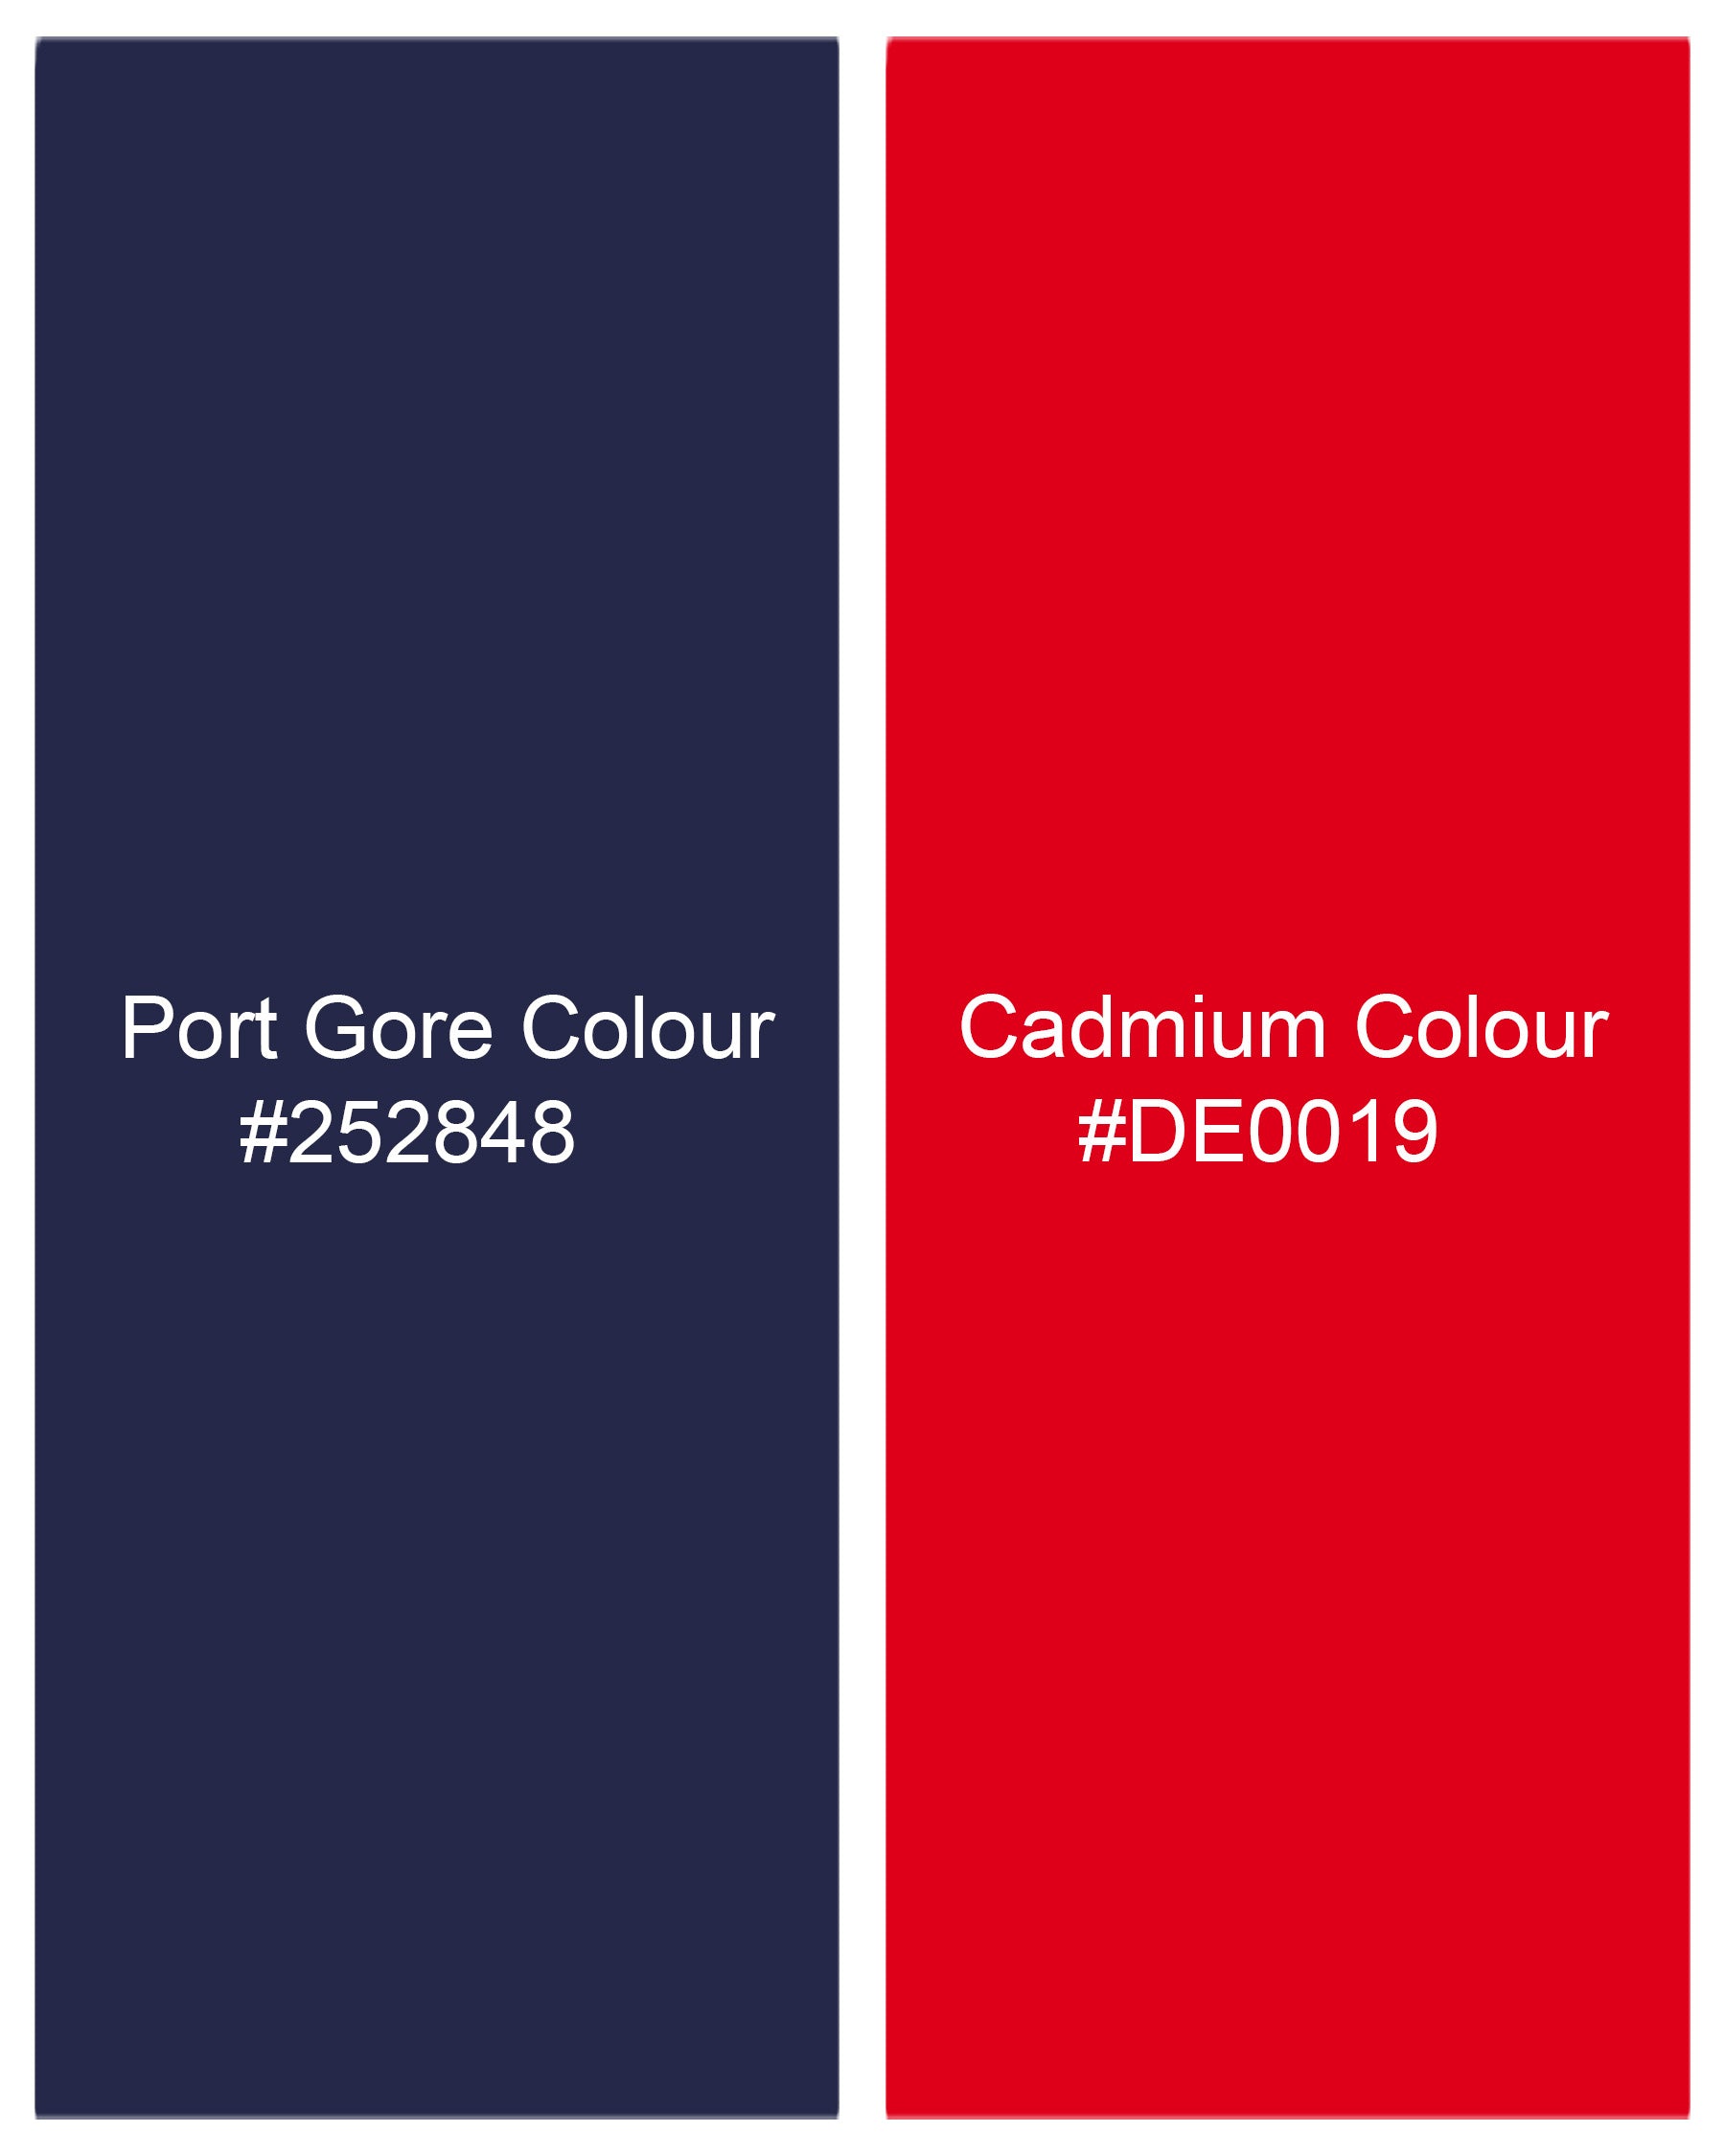 Port Gore Blue and Cadmium Red Dobby Textured Premium Giza Cotton Shirt 8003-38,8003-H-38,8003-39,8003-H-39,8003-40,8003-H-40,8003-42,8003-H-42,8003-44,8003-H-44,8003-46,8003-H-46,8003-48,8003-H-48,8003-50,8003-H-50,8003-52,8003-H-52